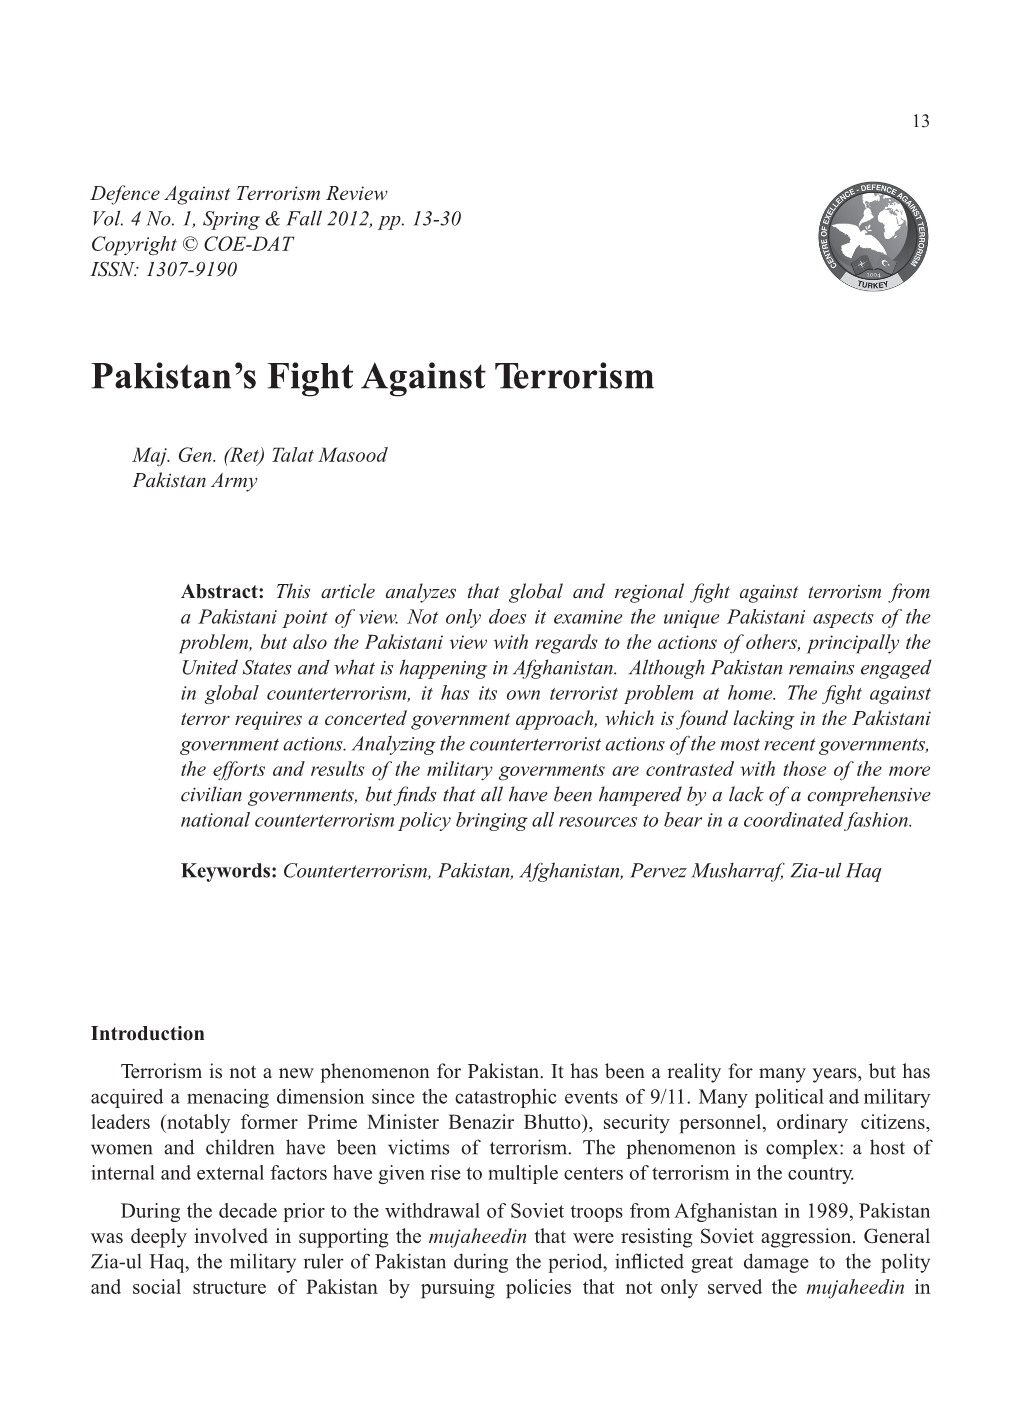 Pakistan's Fight Against Terrorism